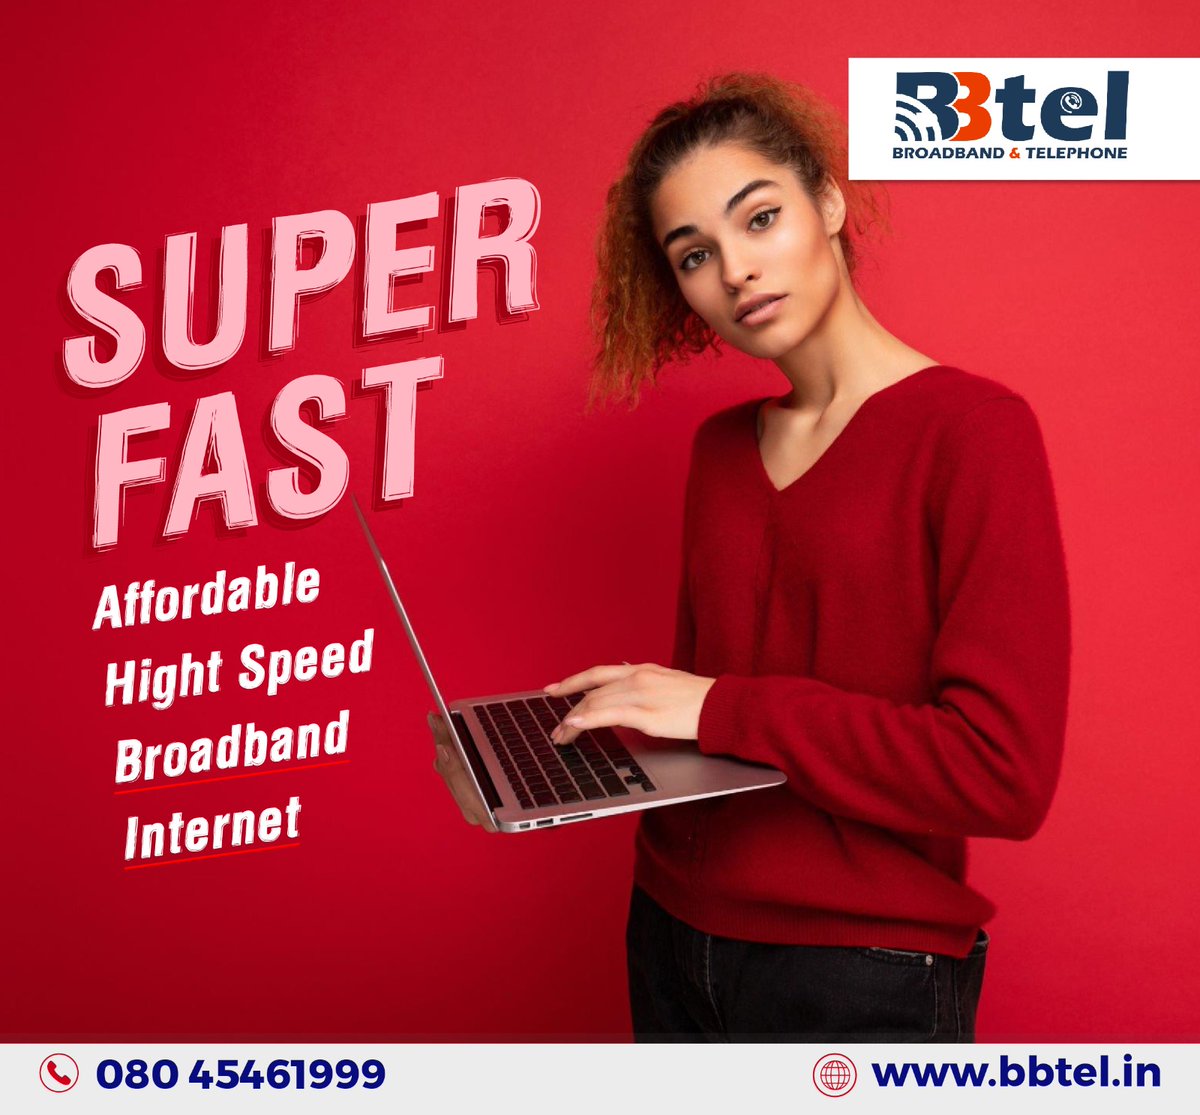 SUPER FAST AND AFFORDABLE HIGH SPEED BROADBAND INTERNET @ JUST 399/-*....
#broadband #WIFI #internetserviceprovider #network #HighSpeedInternet  #fiberoptics #InternetConnection #speed #serviceprovider #BroadbandForAll #bangaloreinternet #HighSpeedInternet #internetandservice